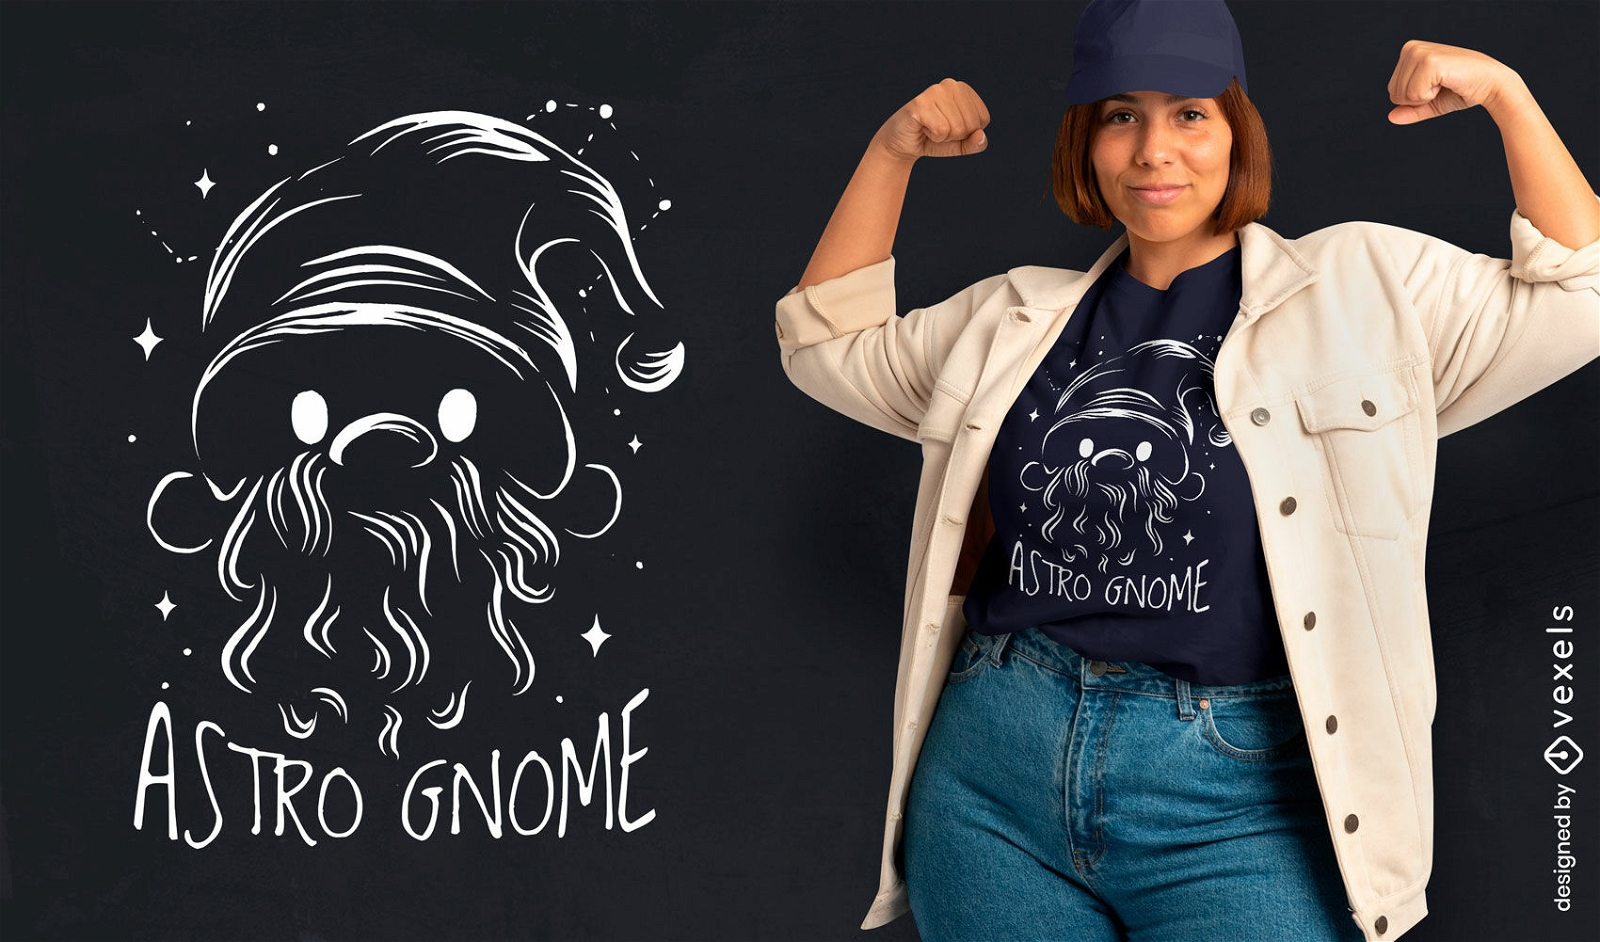 Astro gnome t-shirt design